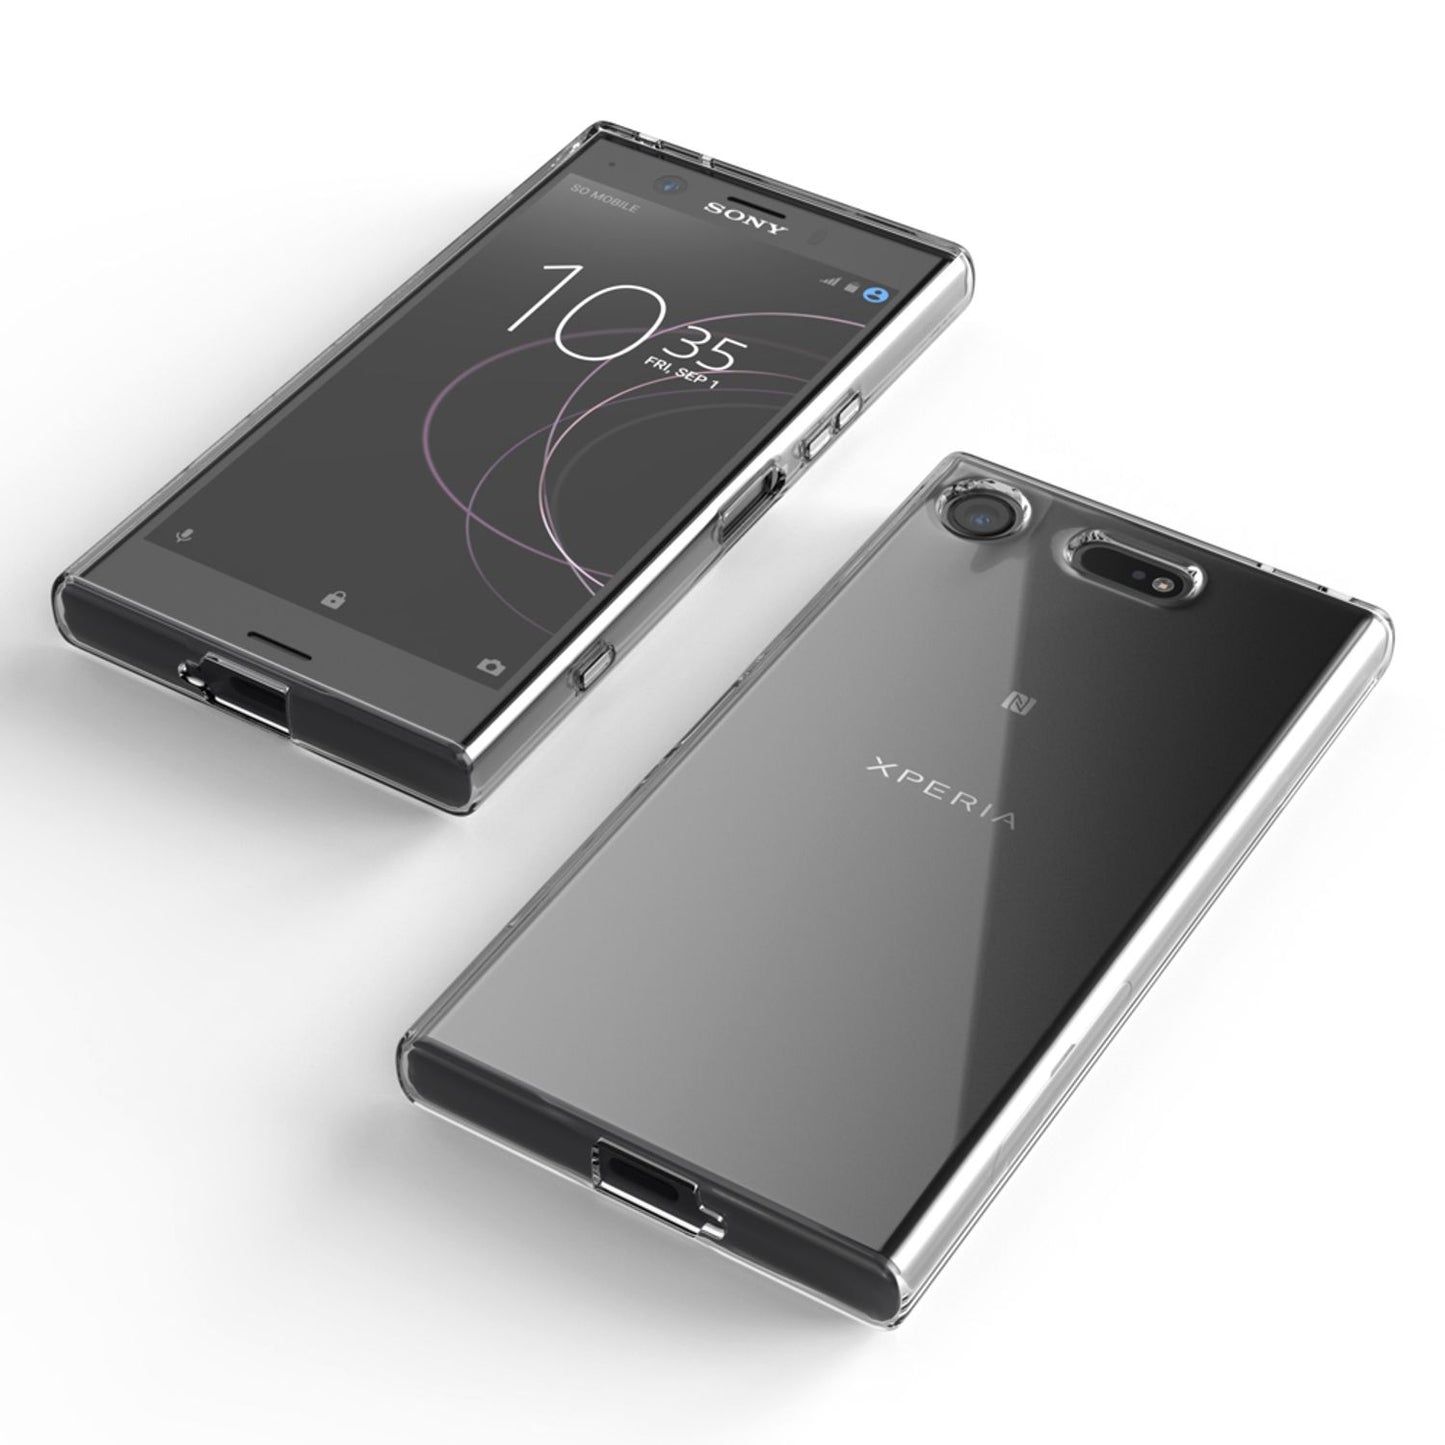 NALIA Handy Hülle für Sony Xperia XZ1, Silikon Case Cover Schutz Tasche Bumper